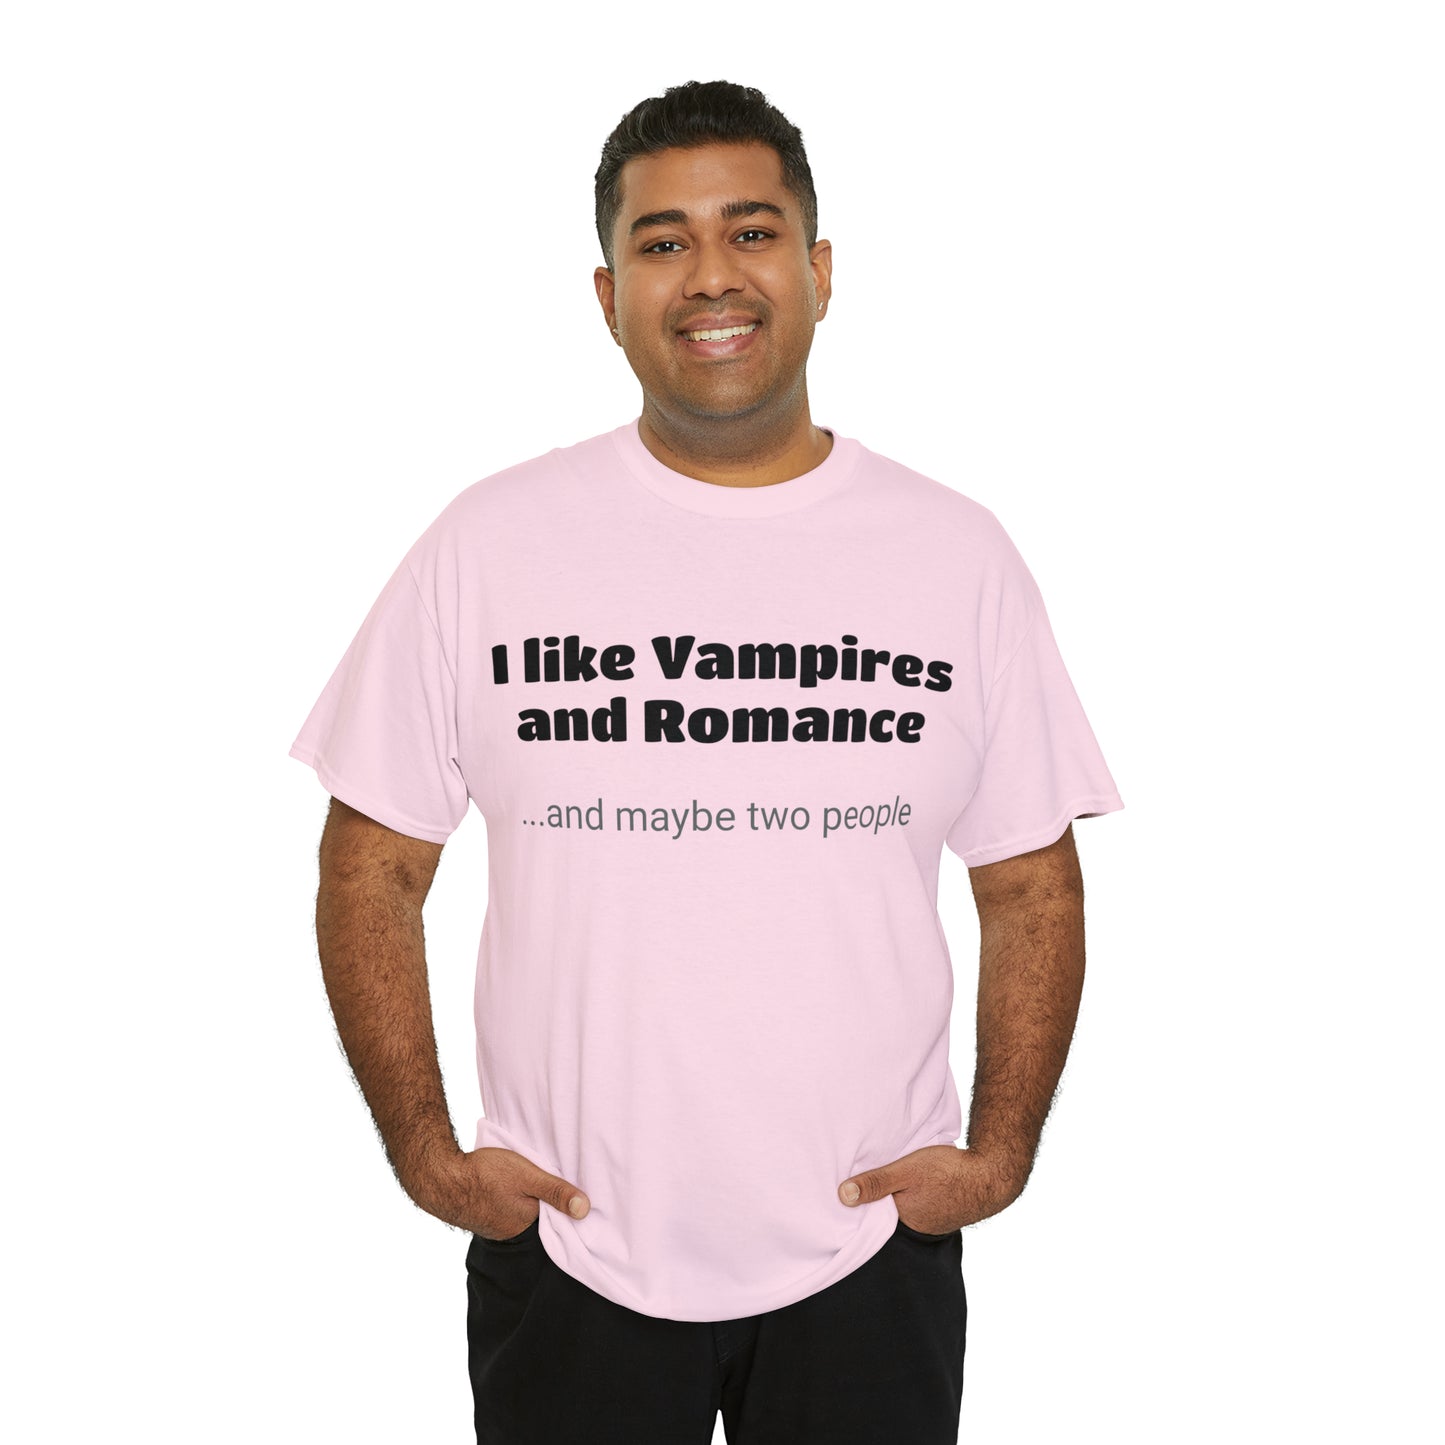 i like Vampires - unisex heavy cotton tee